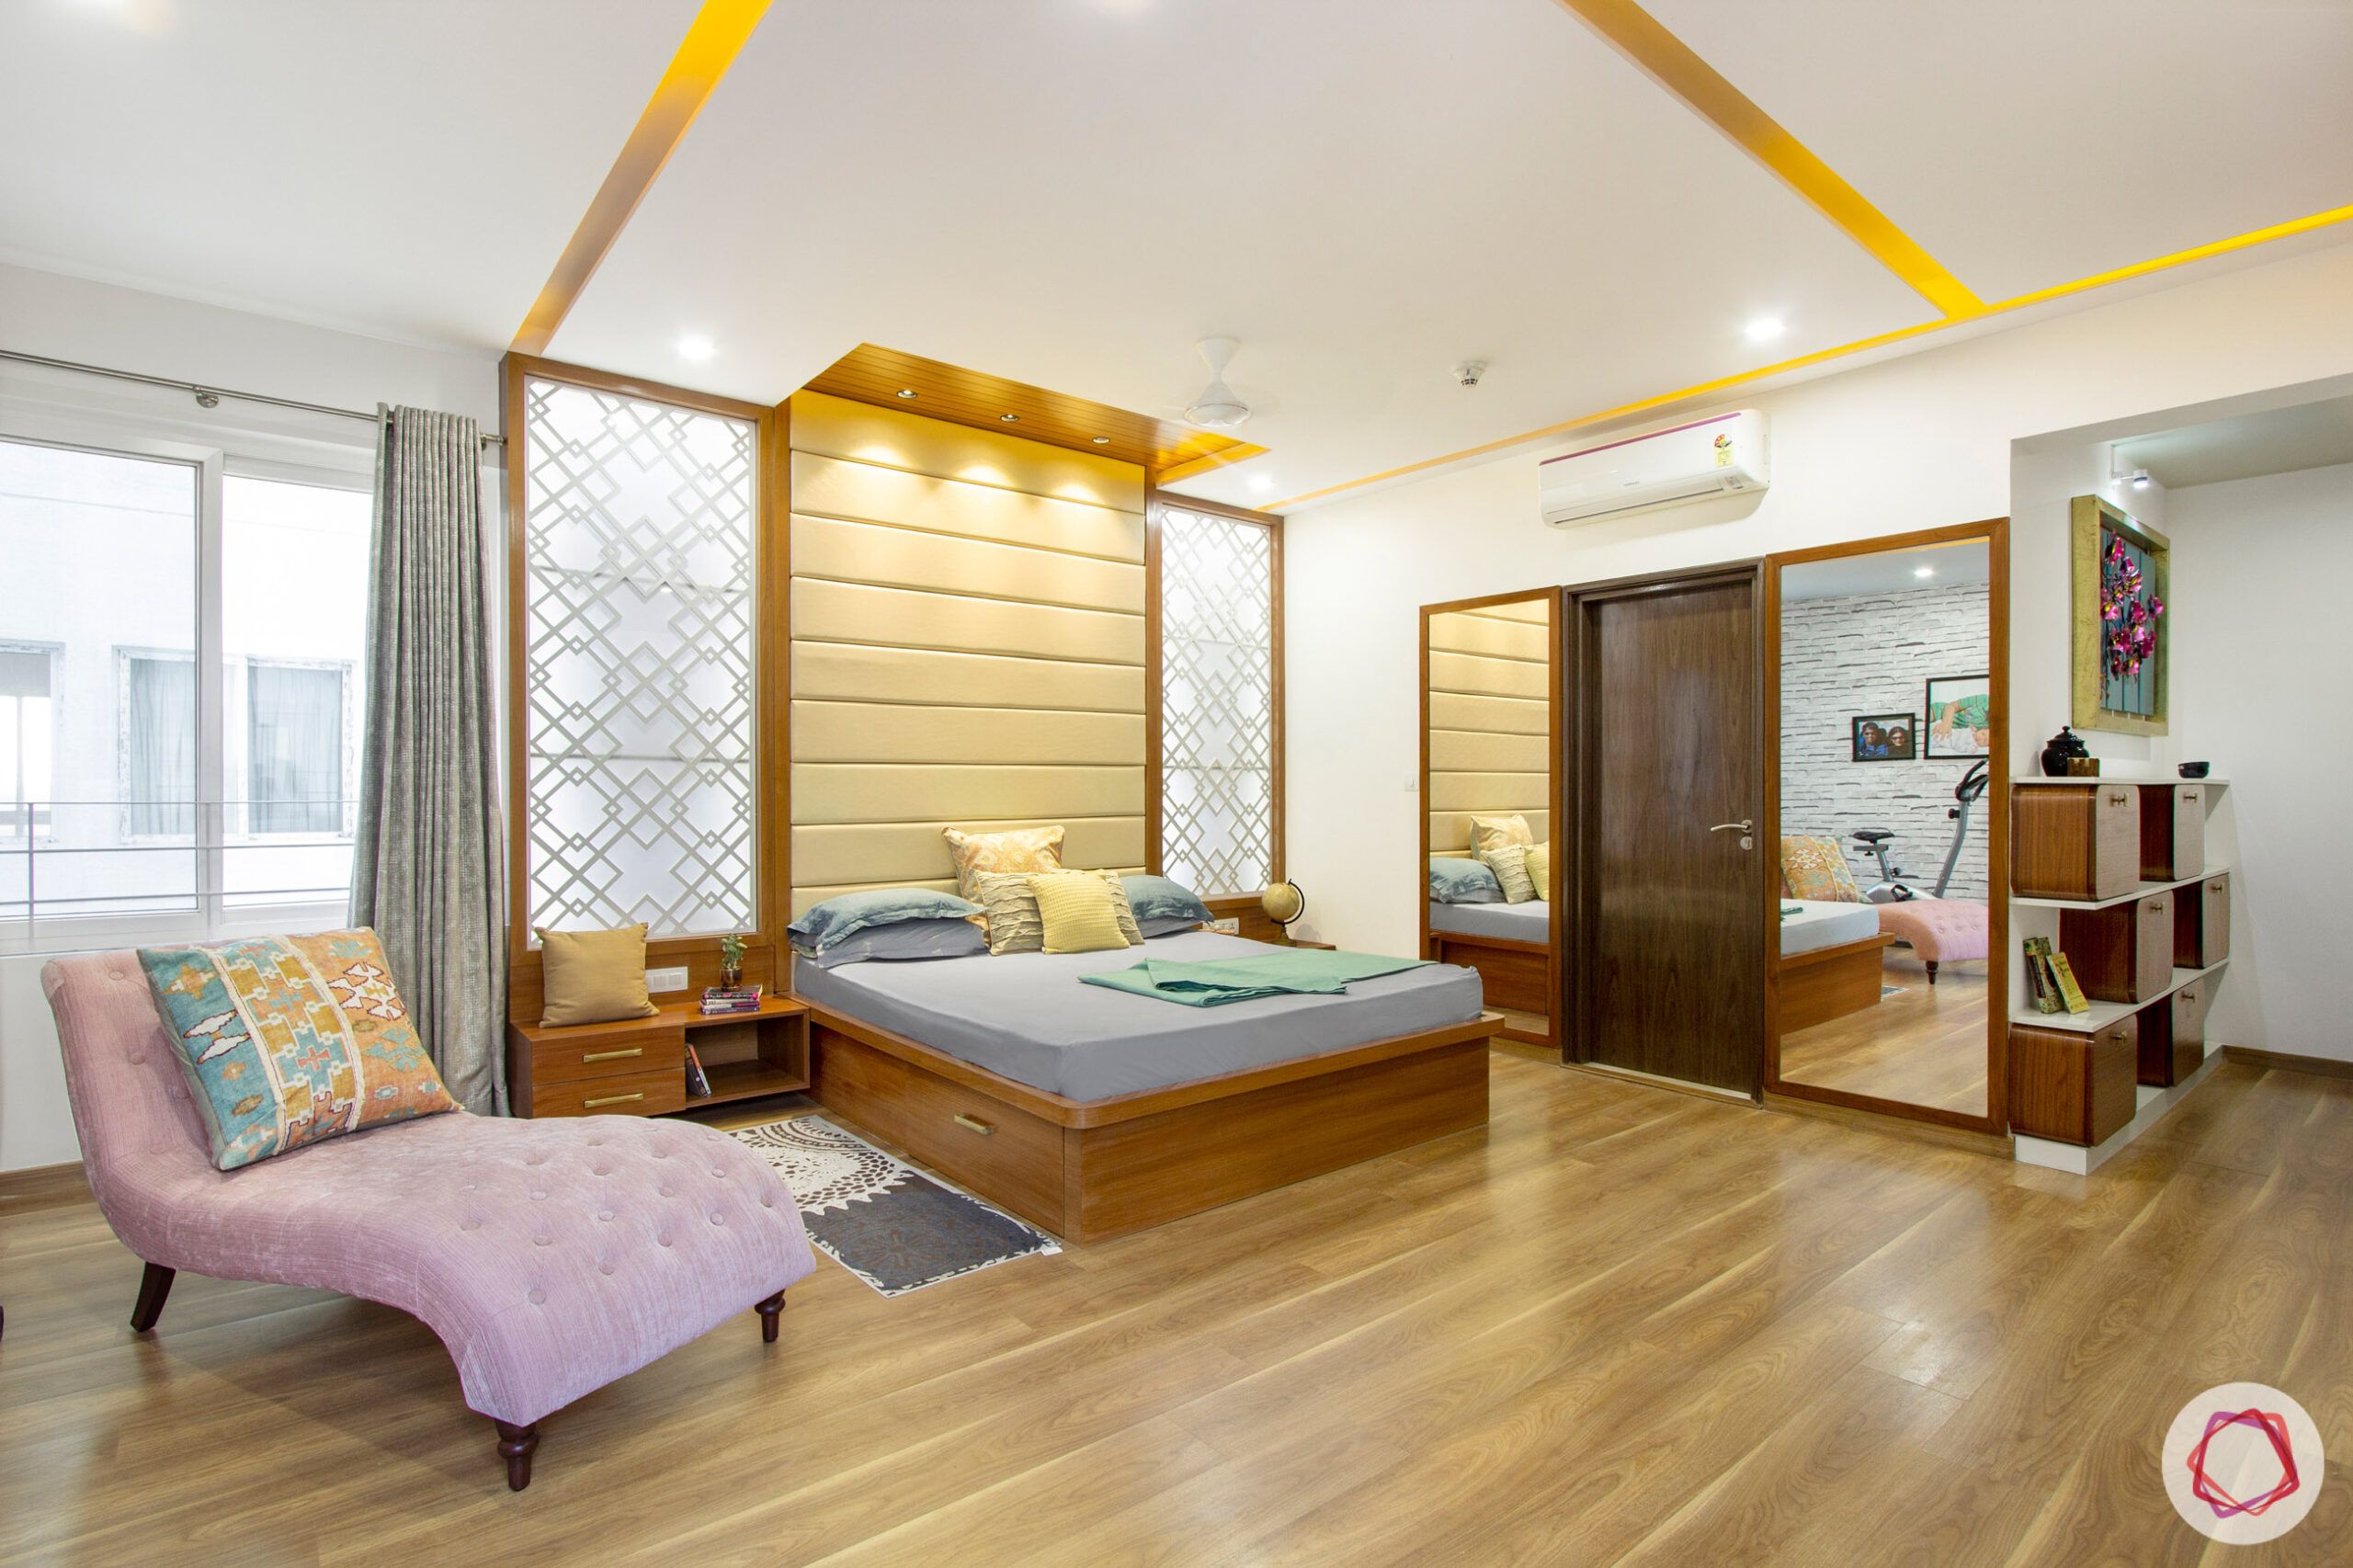 How-to-Reduce-Interior-Design-Cost-laminate-wooden-flooring-bedroom